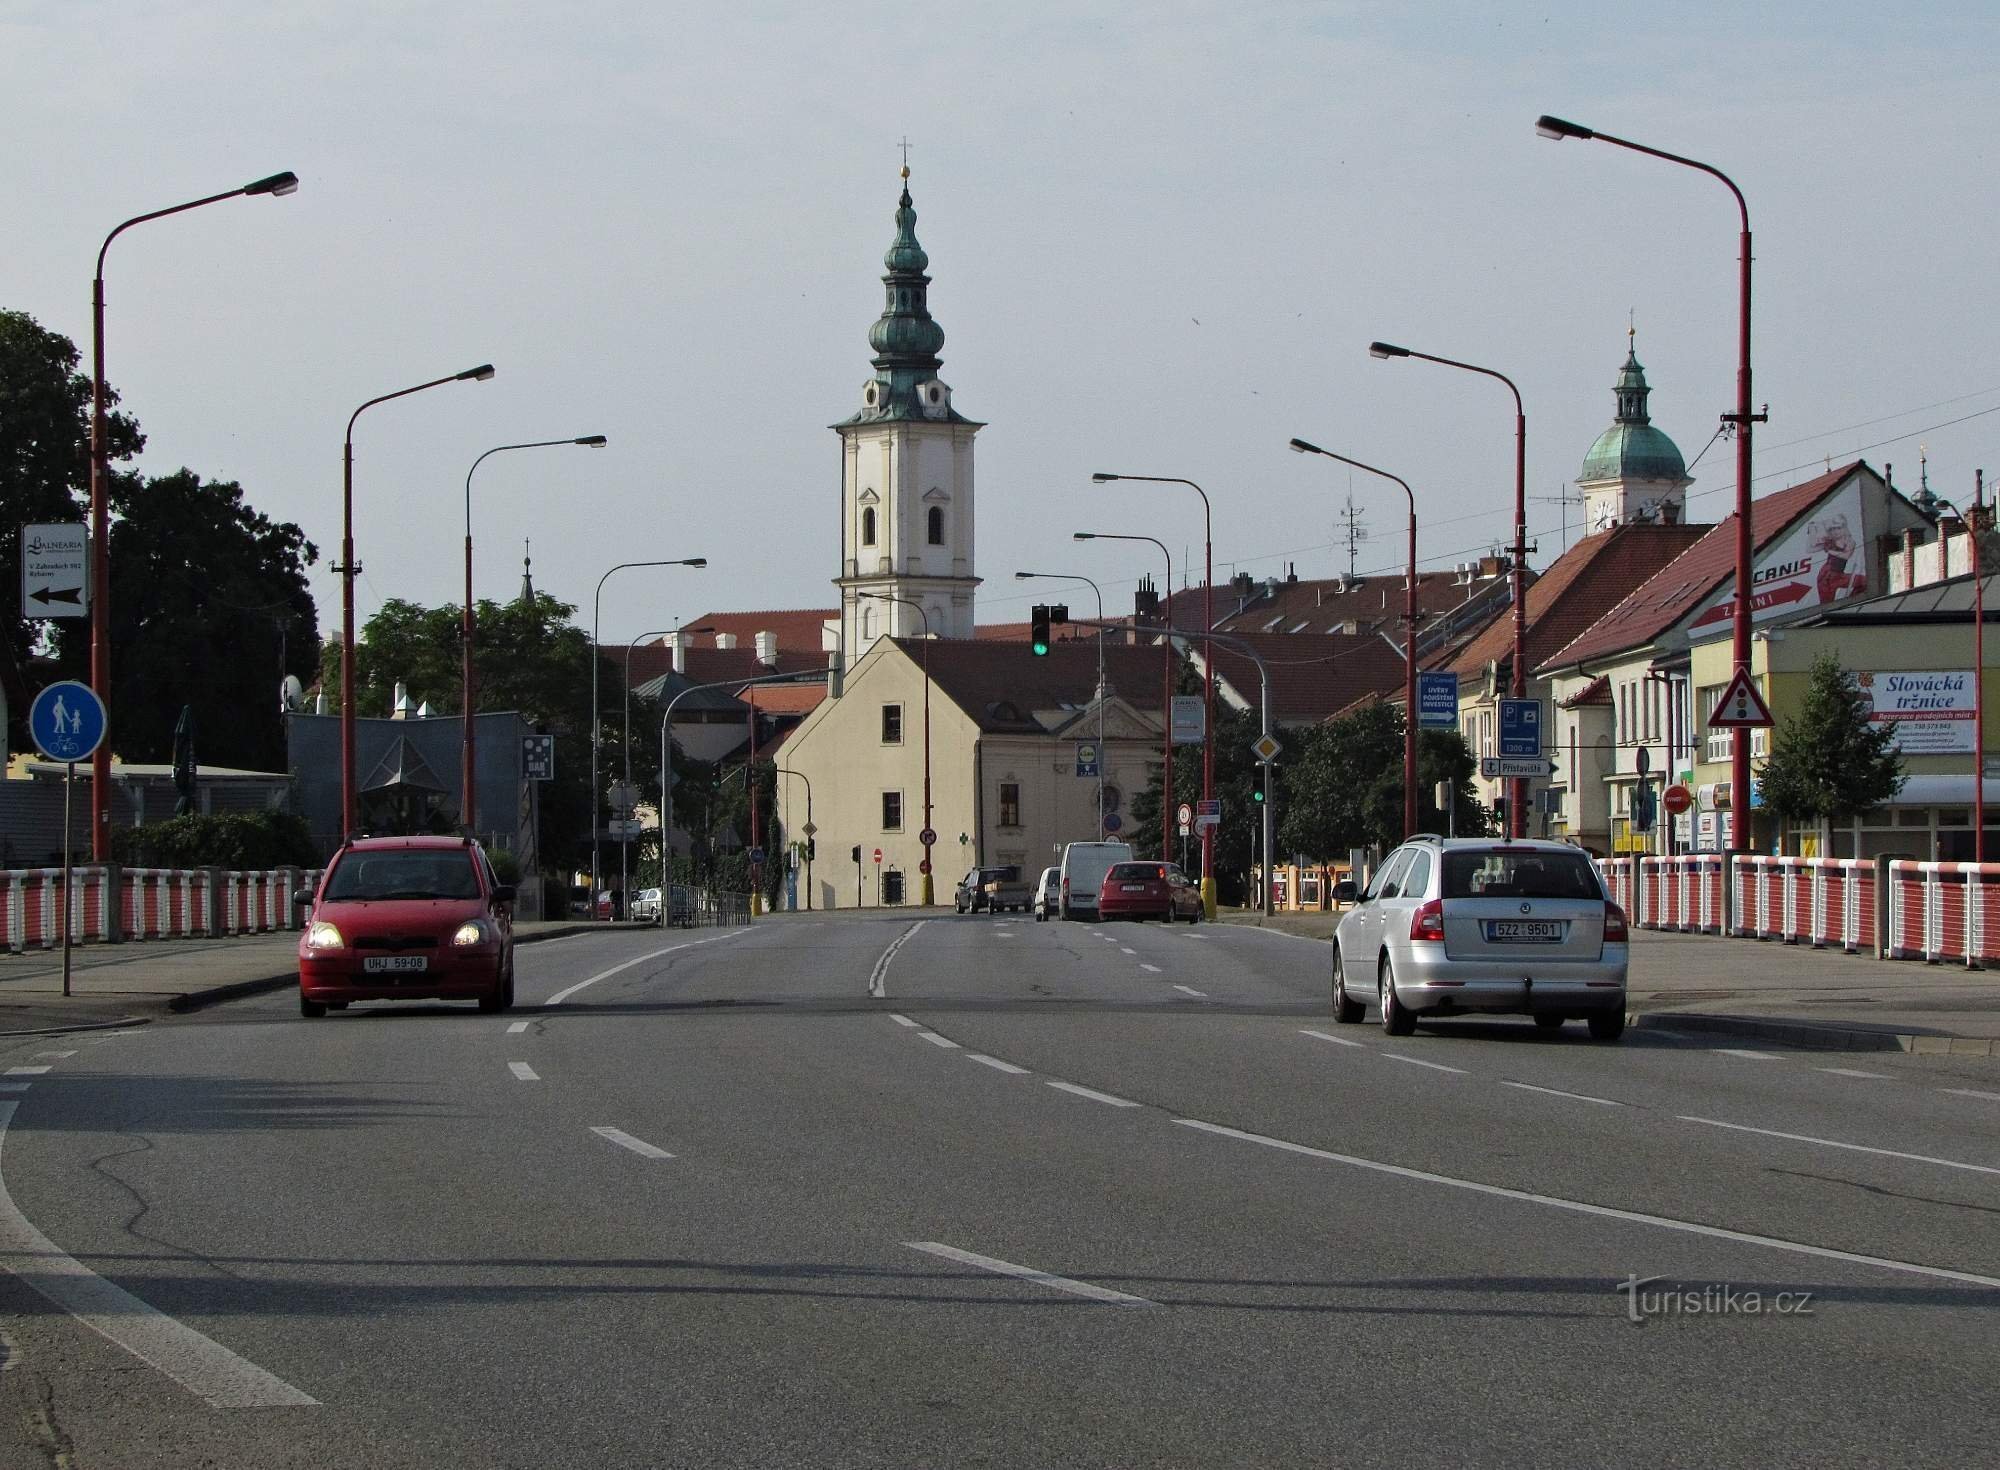 Uherské Hradiště - περιοχή του μοναστηριού και της εκκλησίας των Φραγκισκανών